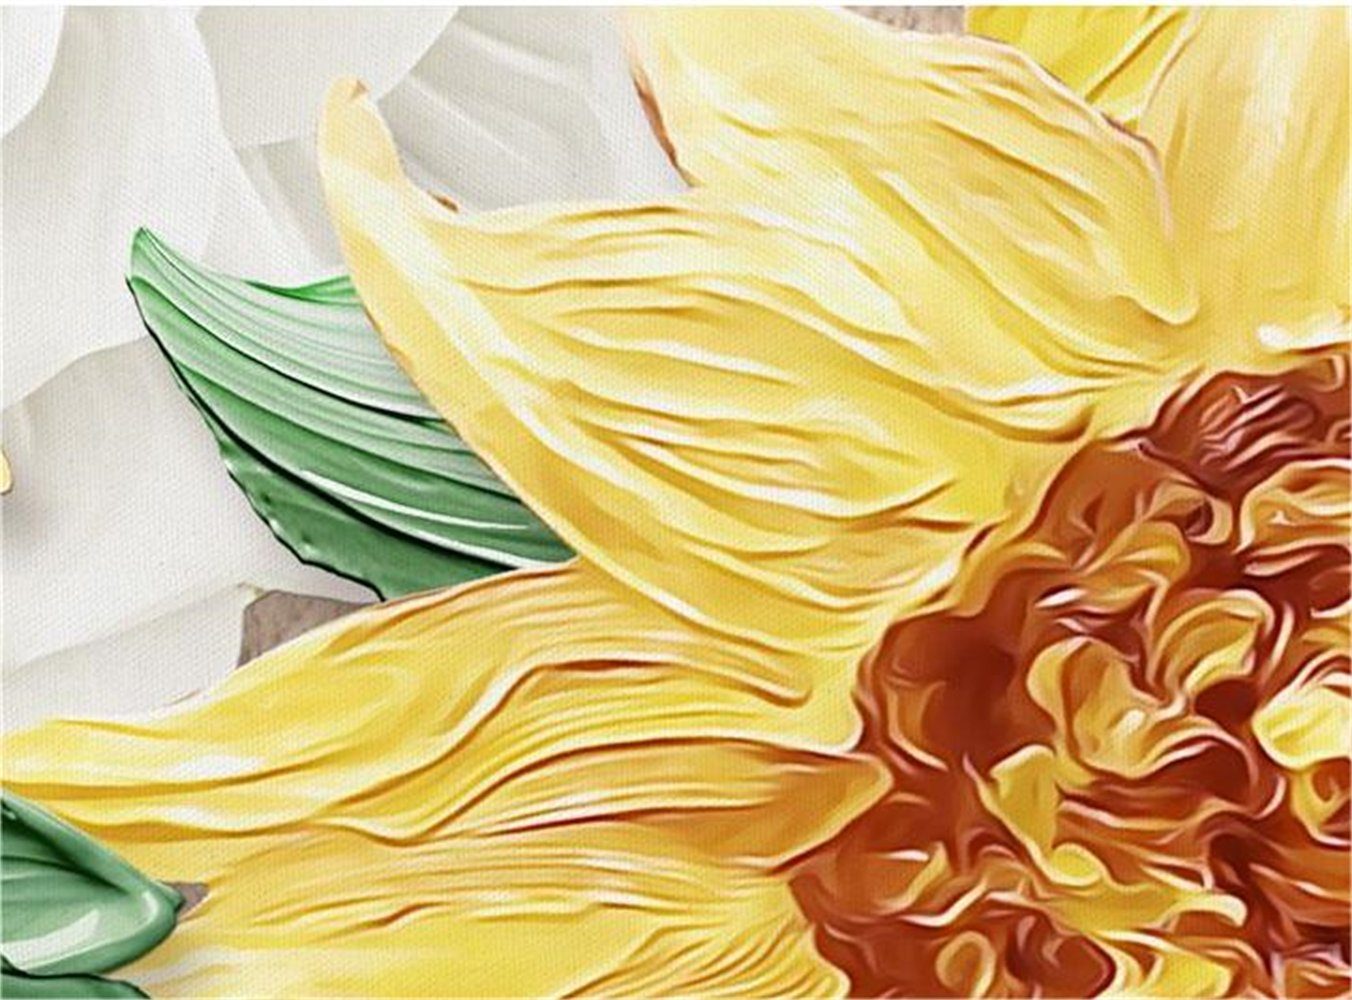 Sonnenblume Wanddekoration, Rouemi Blume Kunstdruck Gelb-A Leinwandbilder, dekorative Aufhängefertig (30×40cm), Malerei,